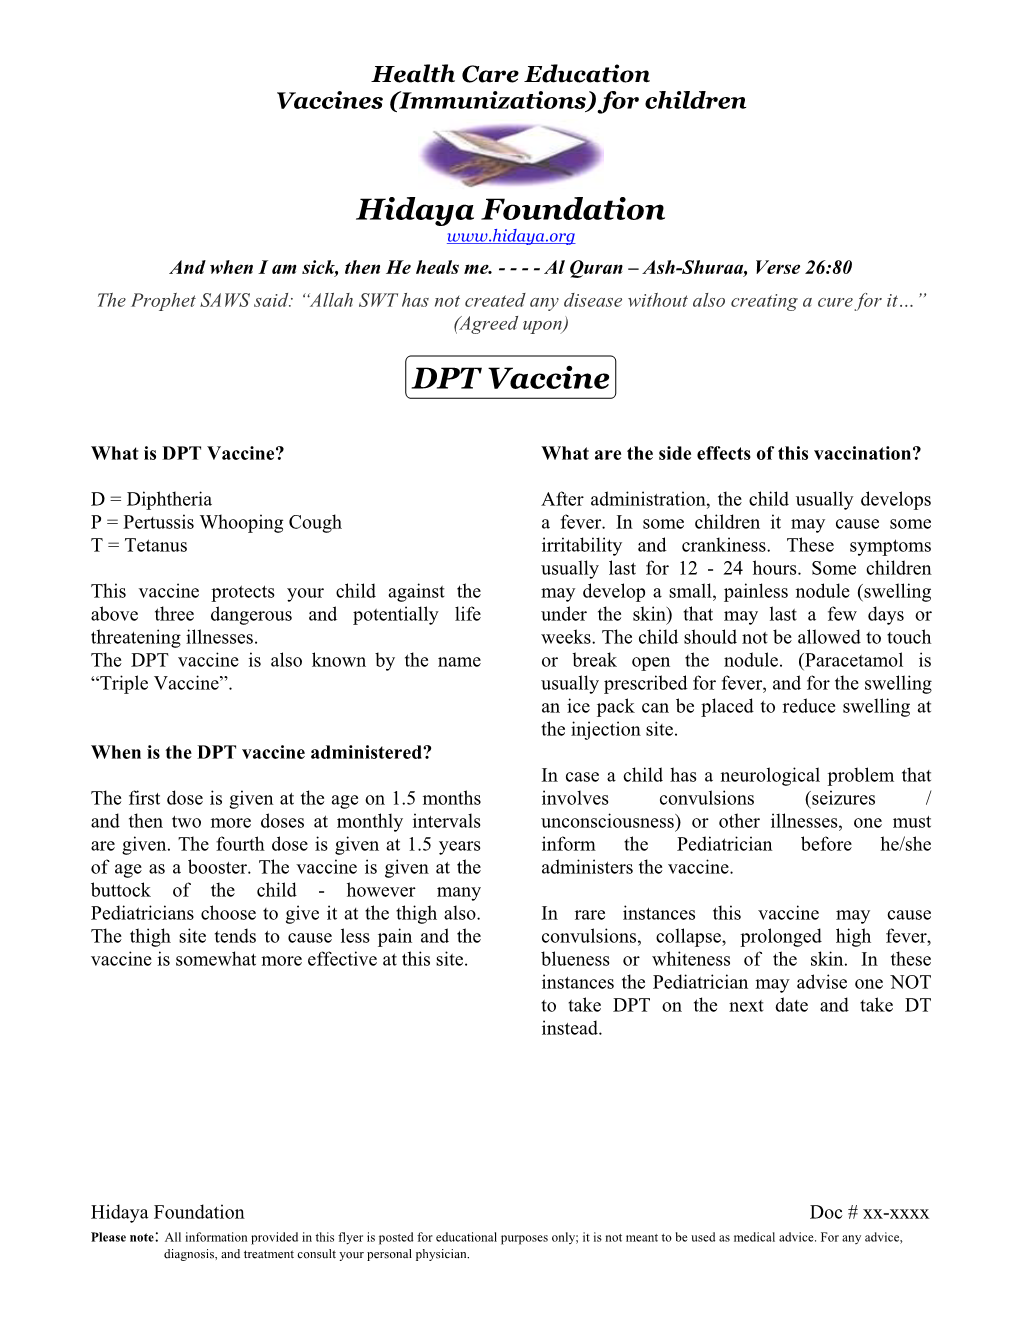 Hidaya Foundation DPT Vaccine